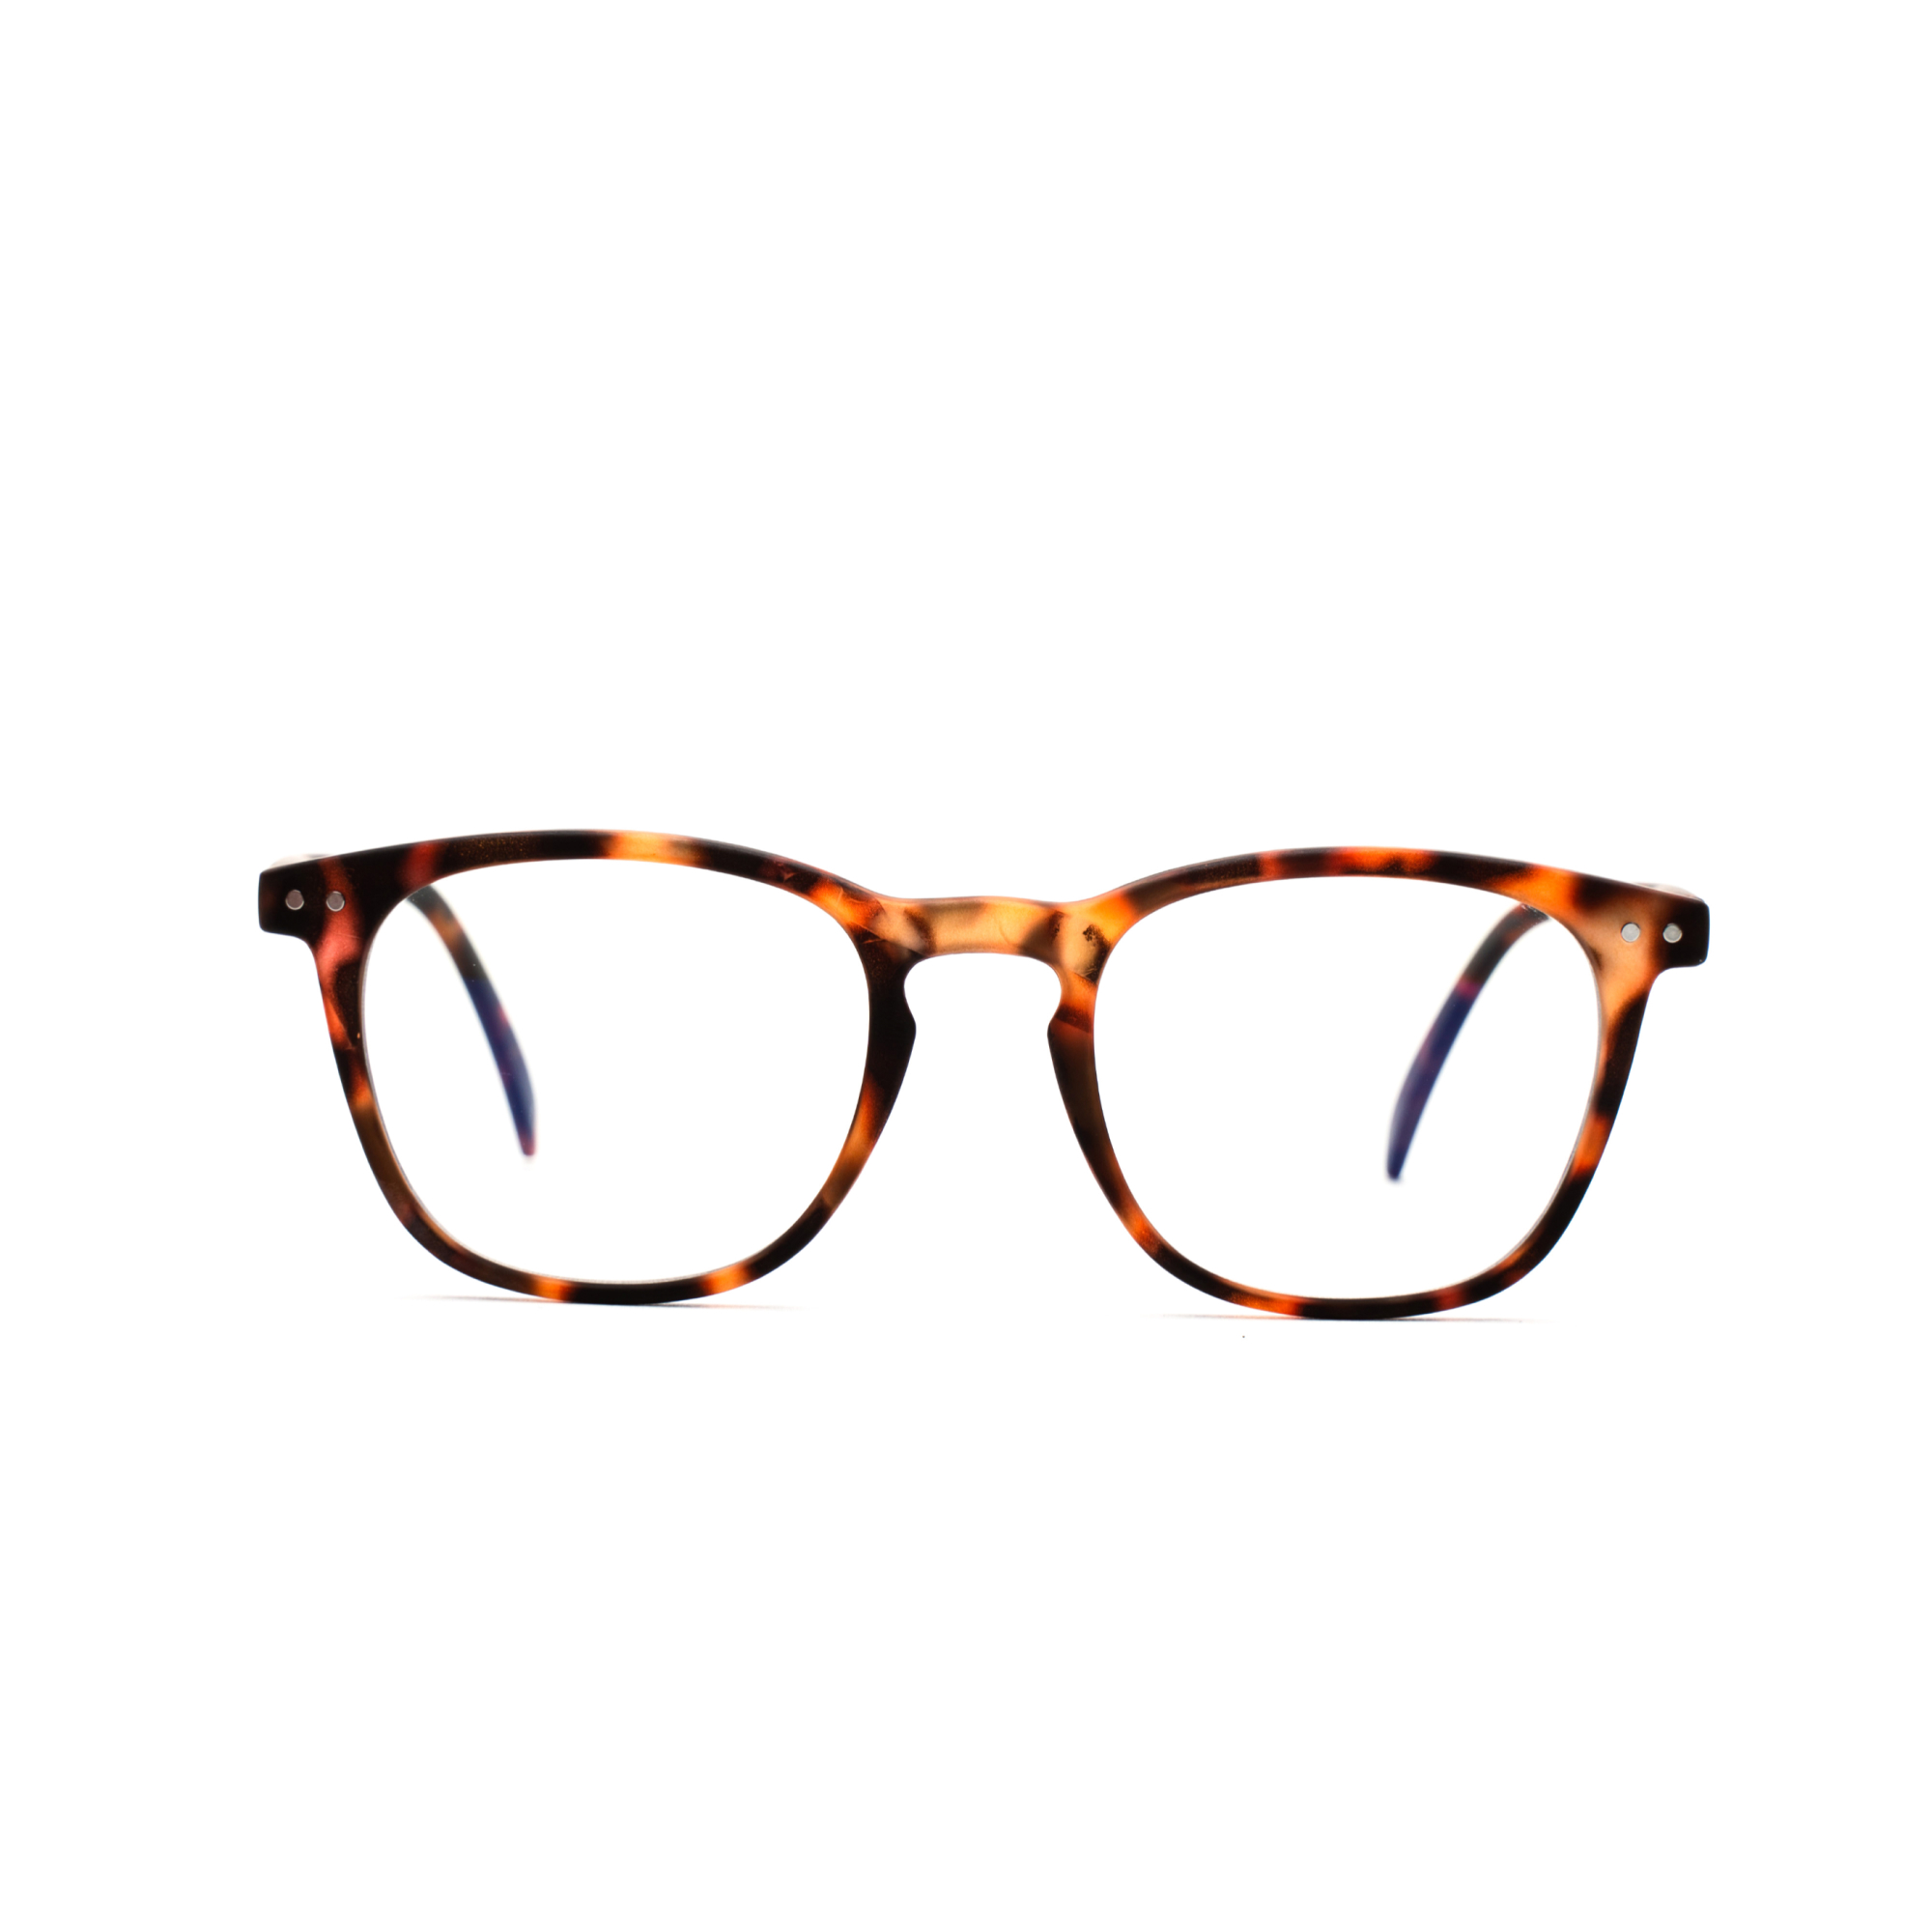 women's reading glasses – William Ultimate w - Tortoise